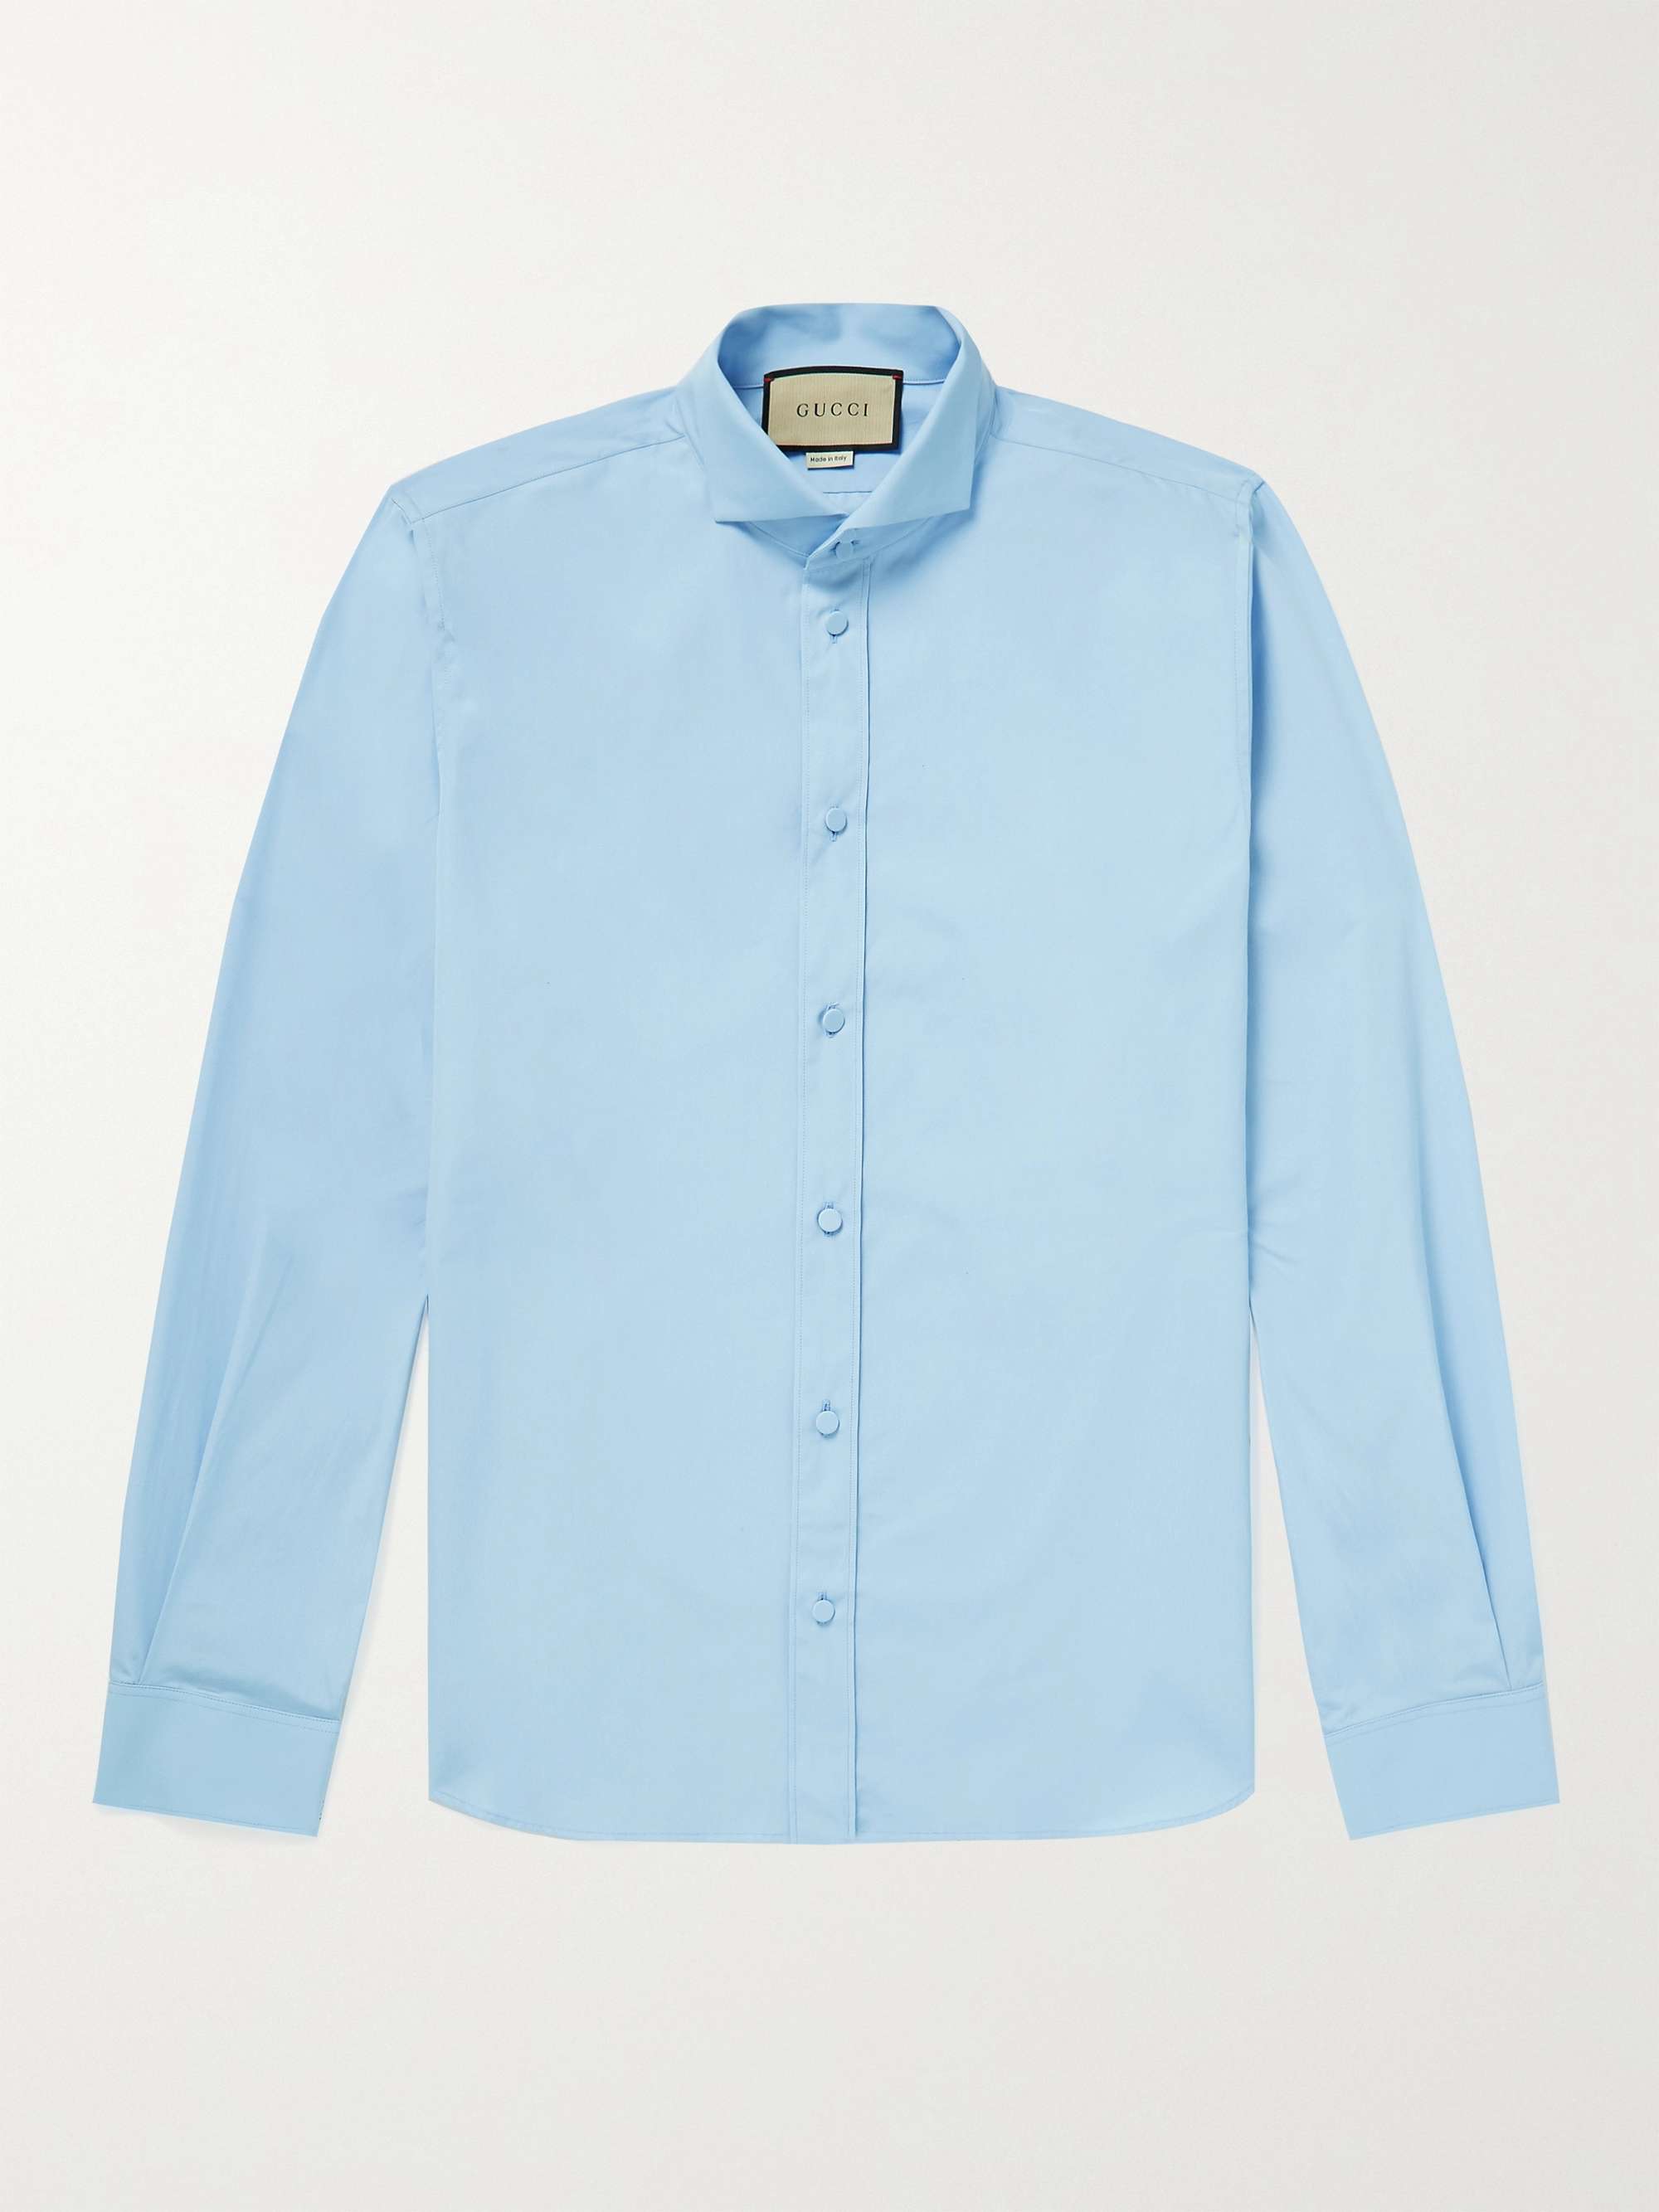 GUCCI Spread-Collar Cotton-Poplin Shirt for Men | MR PORTER